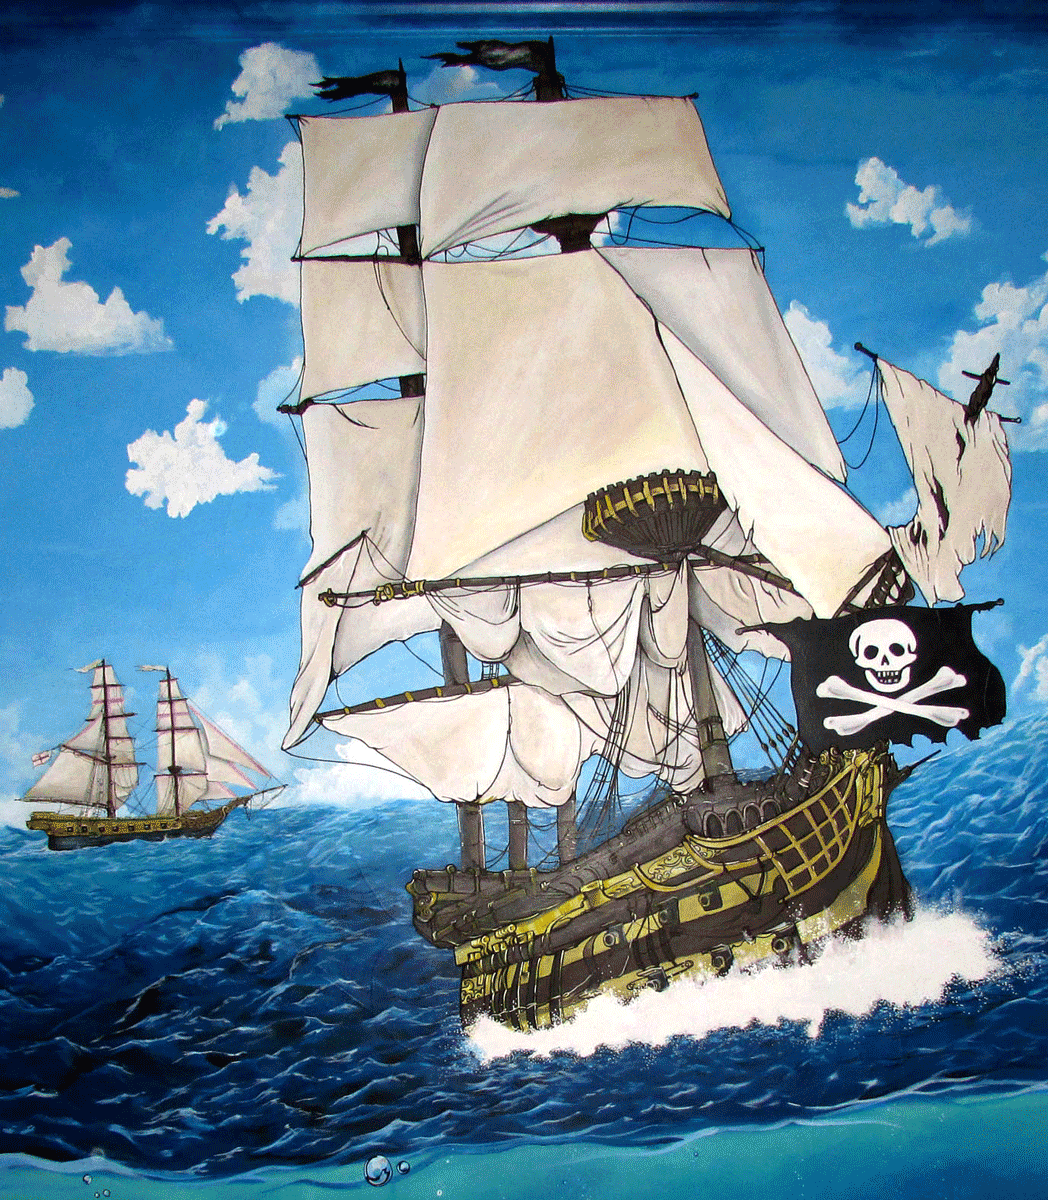 Pirate Ship, Galleon Mural Mesquite Tx